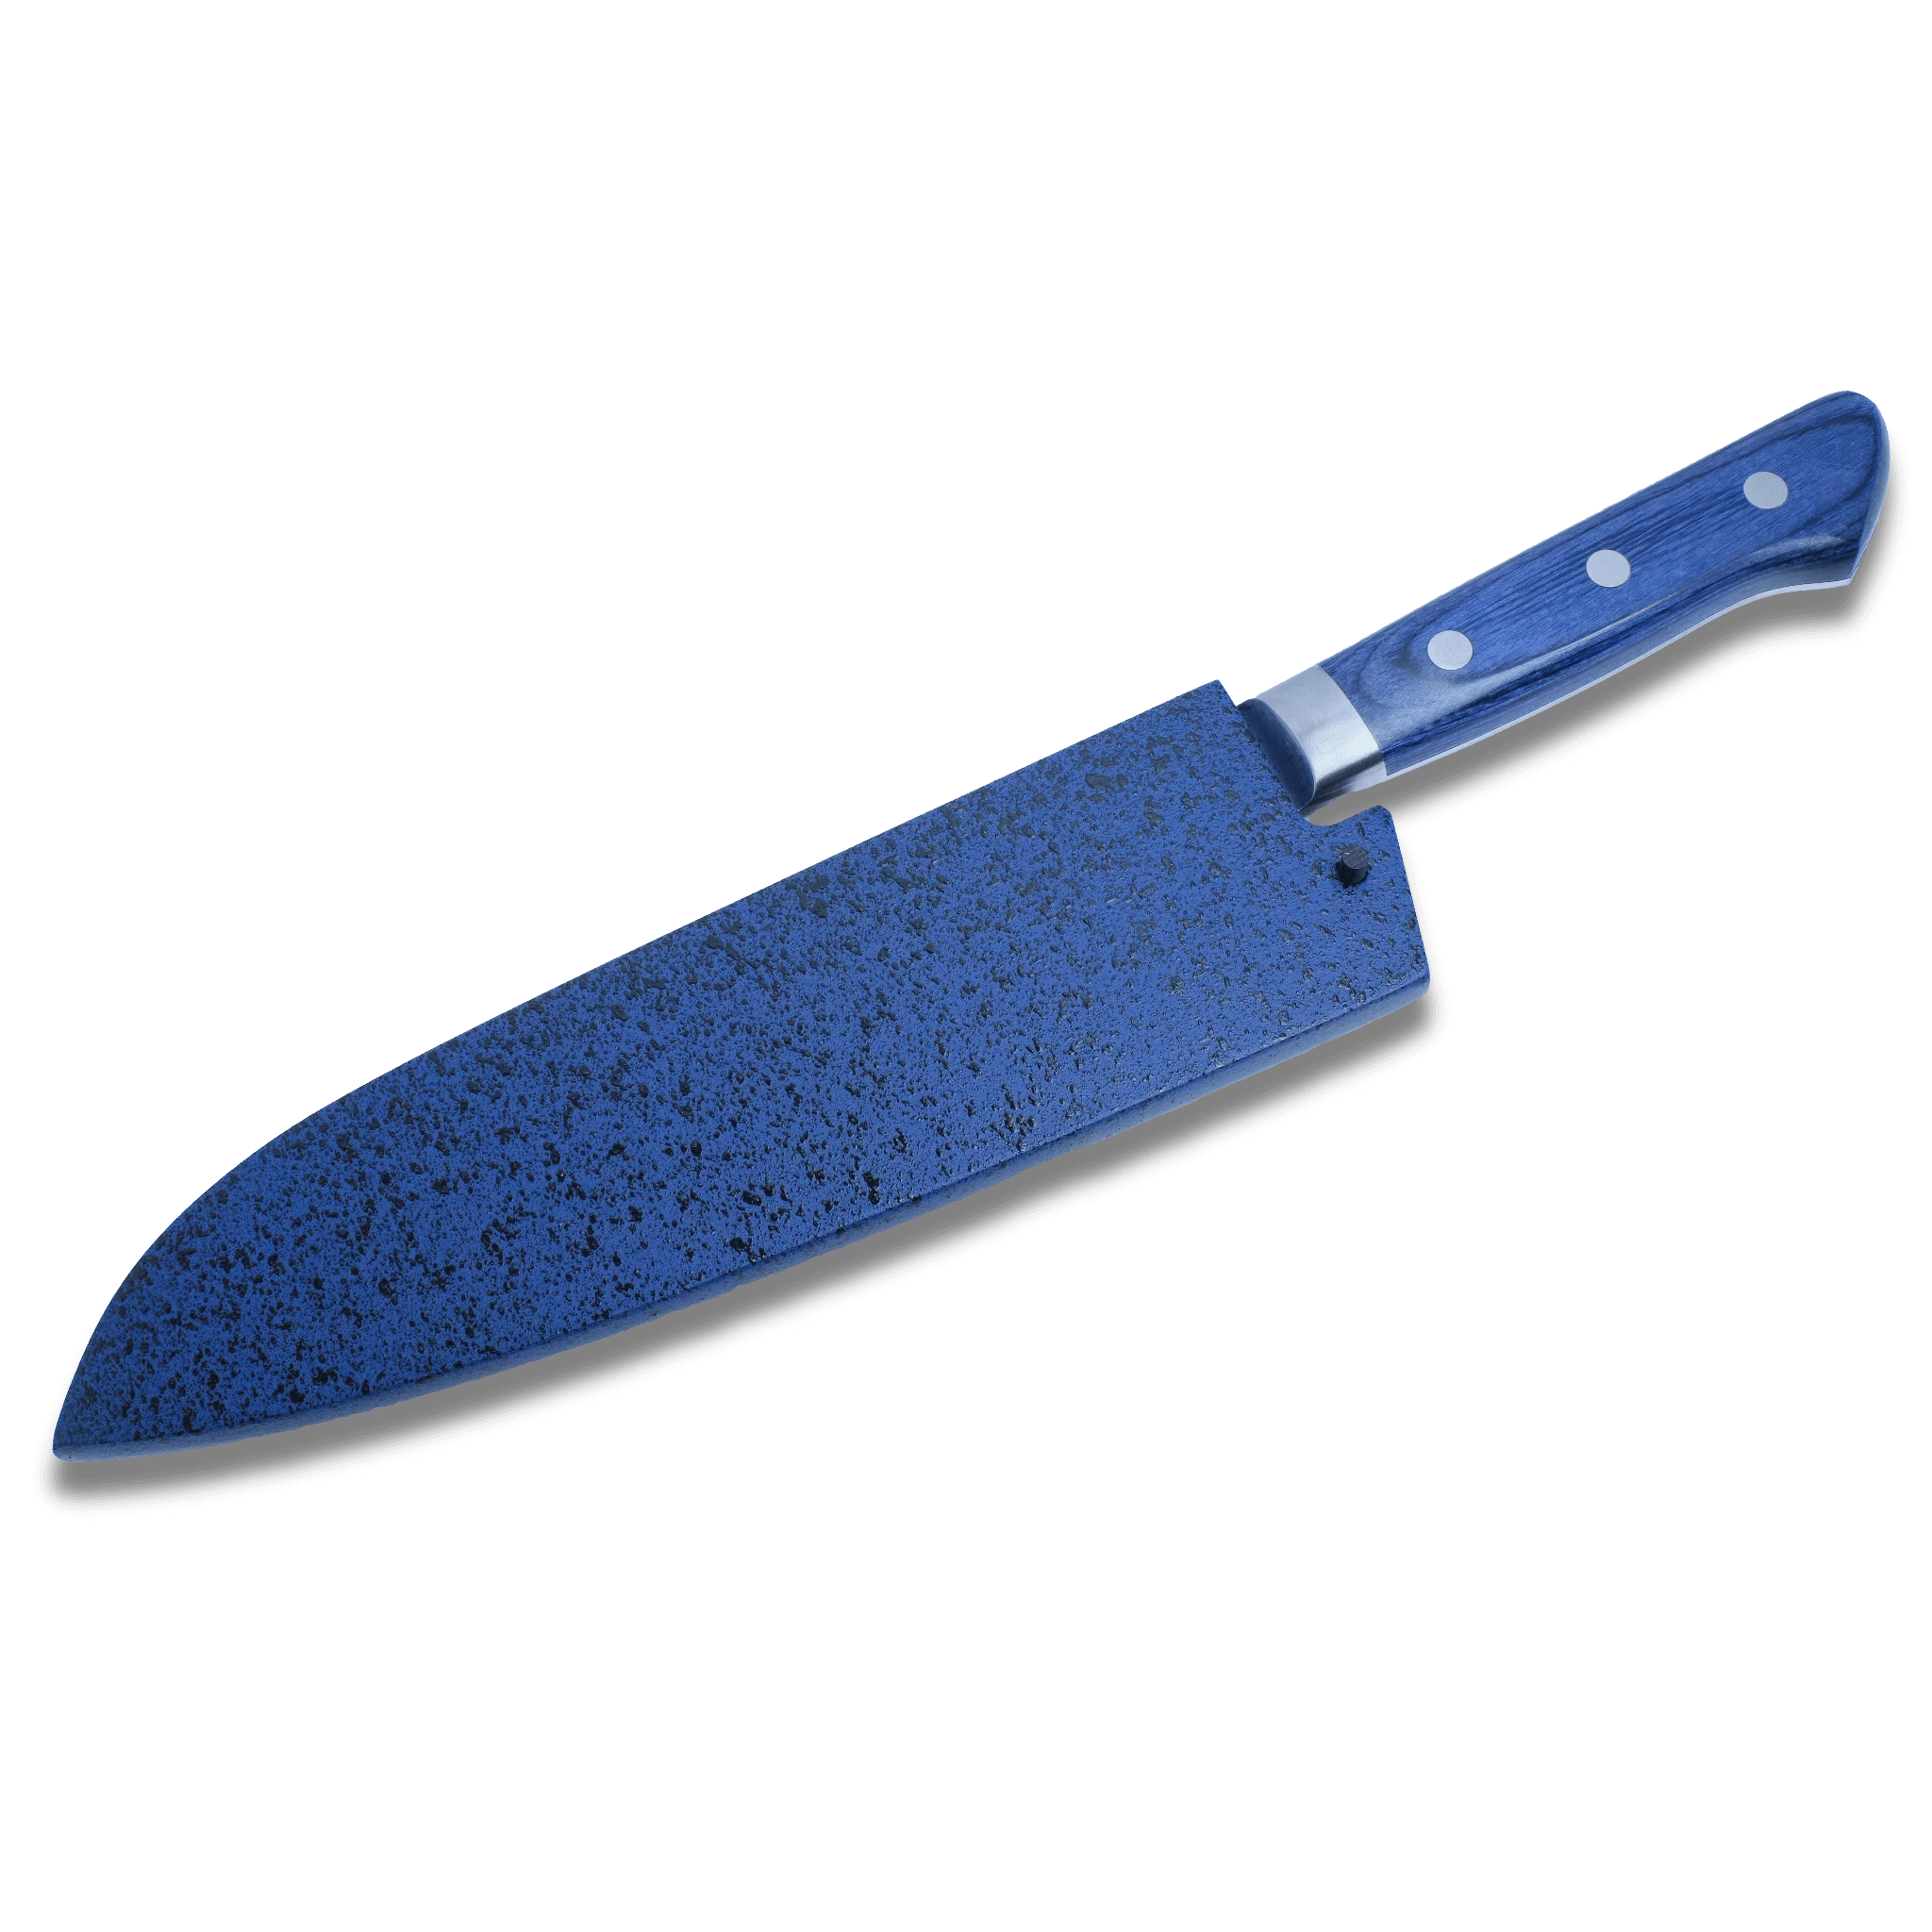 Sheath / Saya Ho Wood (Magnolia) for 180mm Santoku Knife